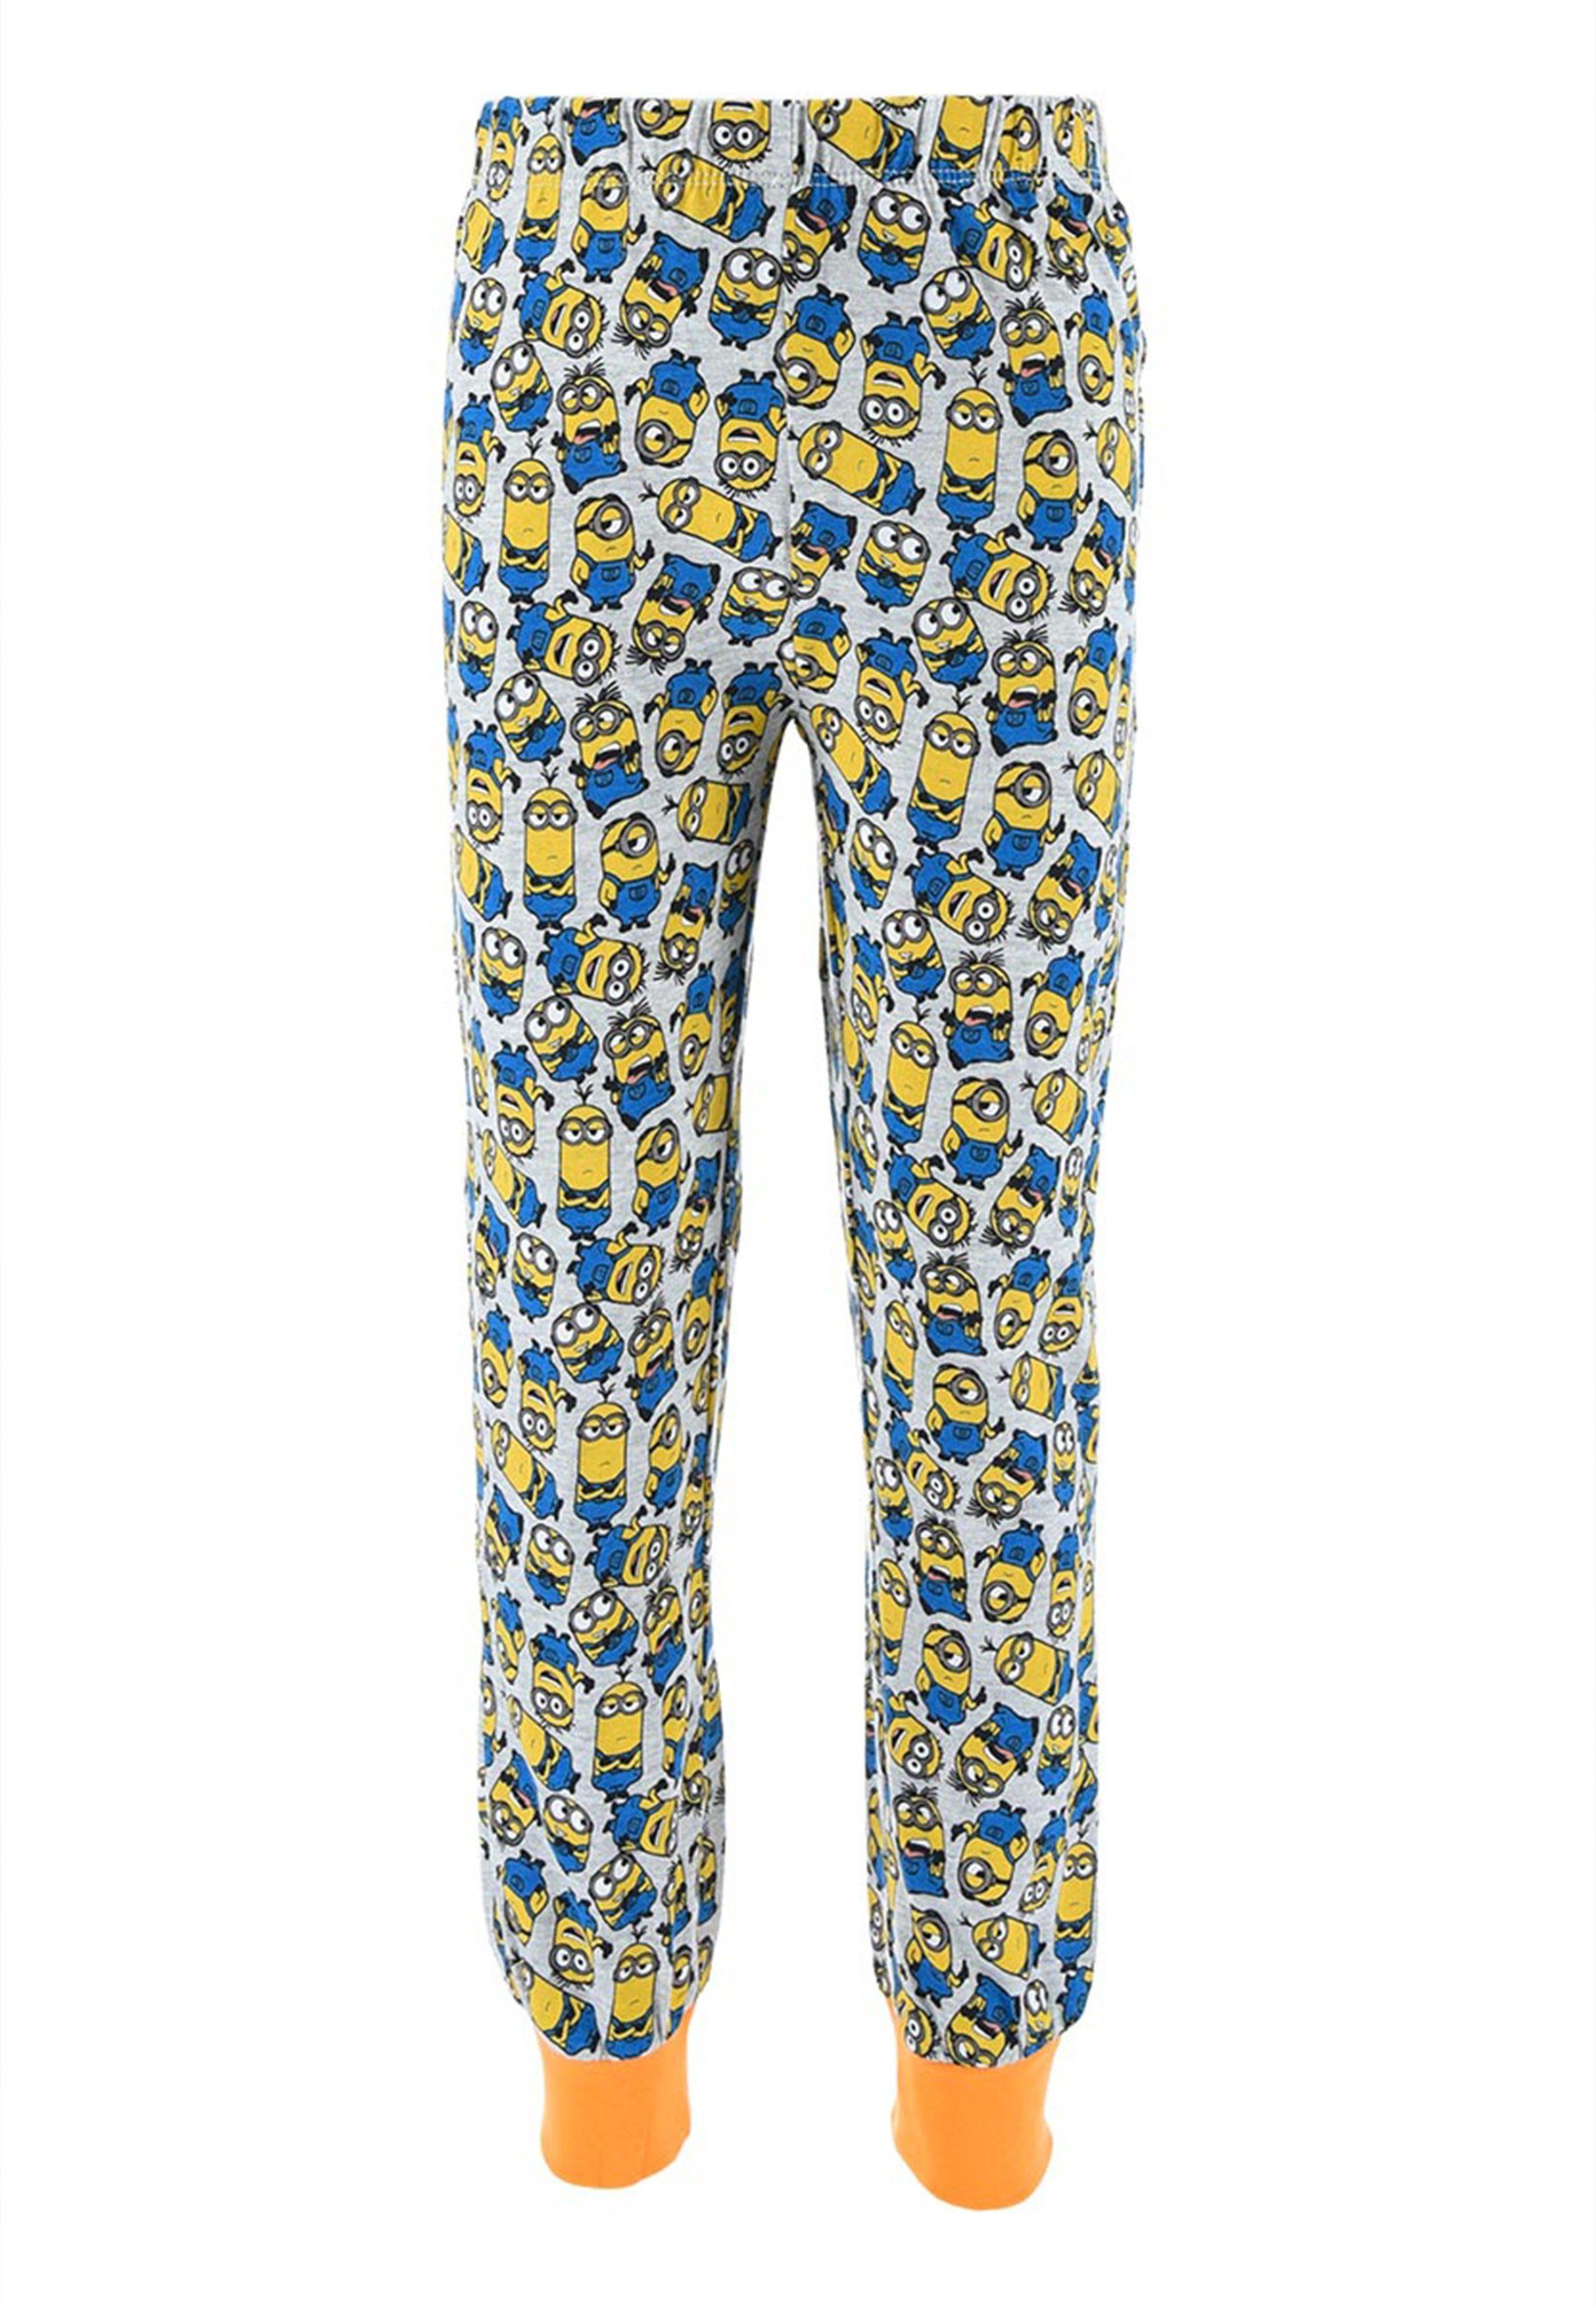 Minions Schlafanzug Kinder Jungen (2 Grau tlg) Set Schlafanzug Pyjama